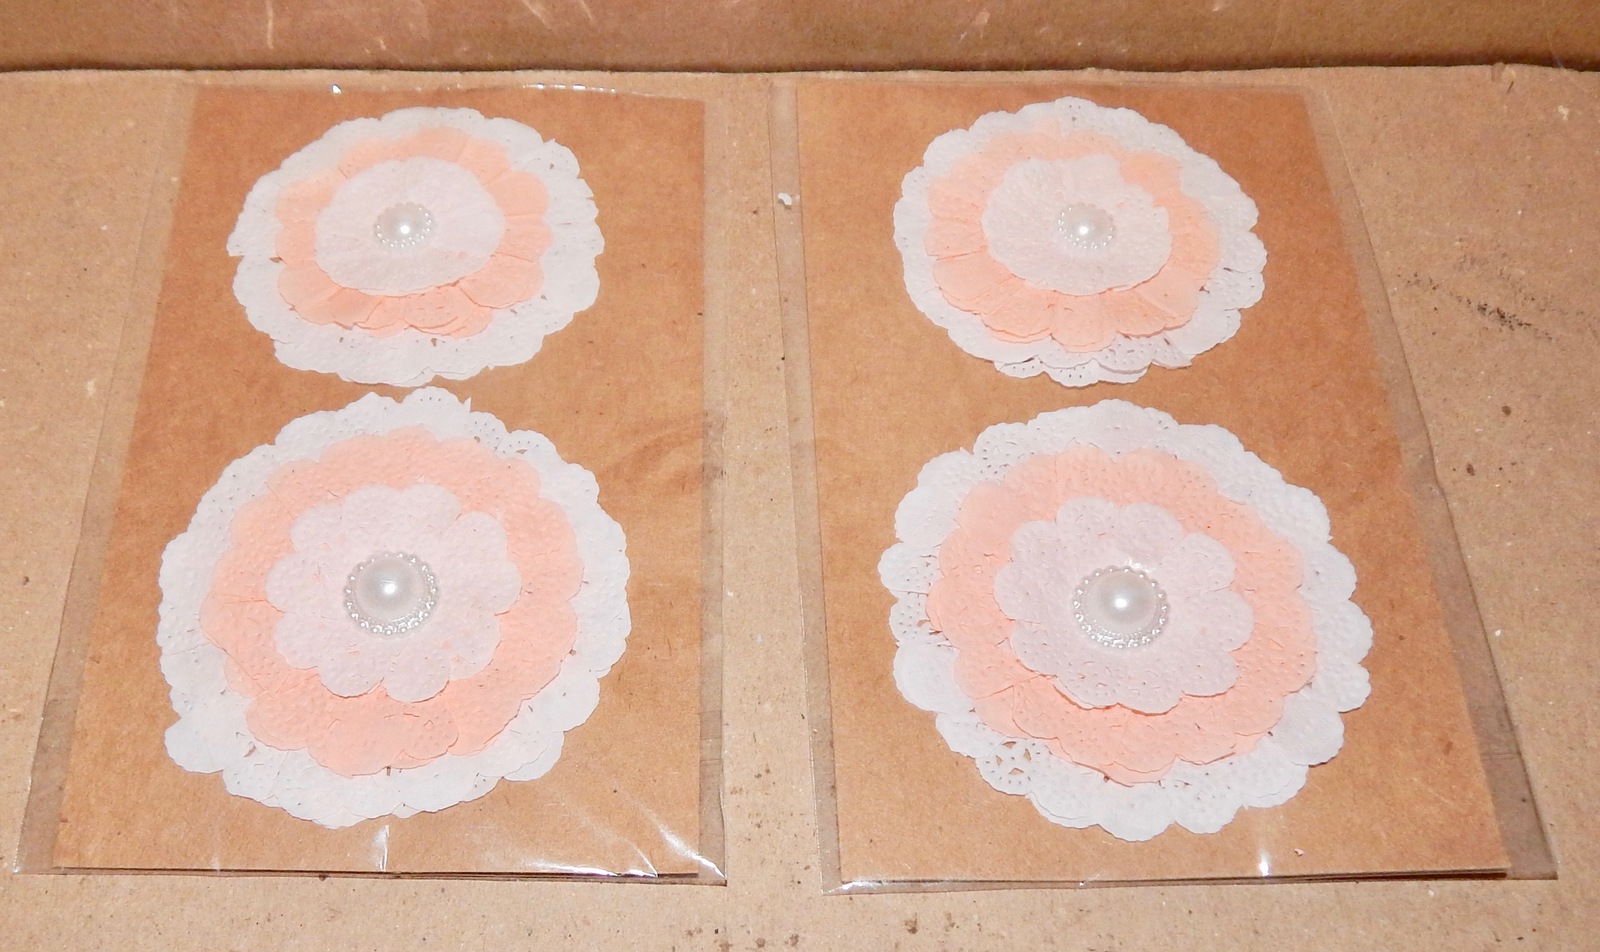 Tassels & Paper Flowers Crafts Mix Lots You Choose Ashland Fall Colors 180I-2 - $3.49